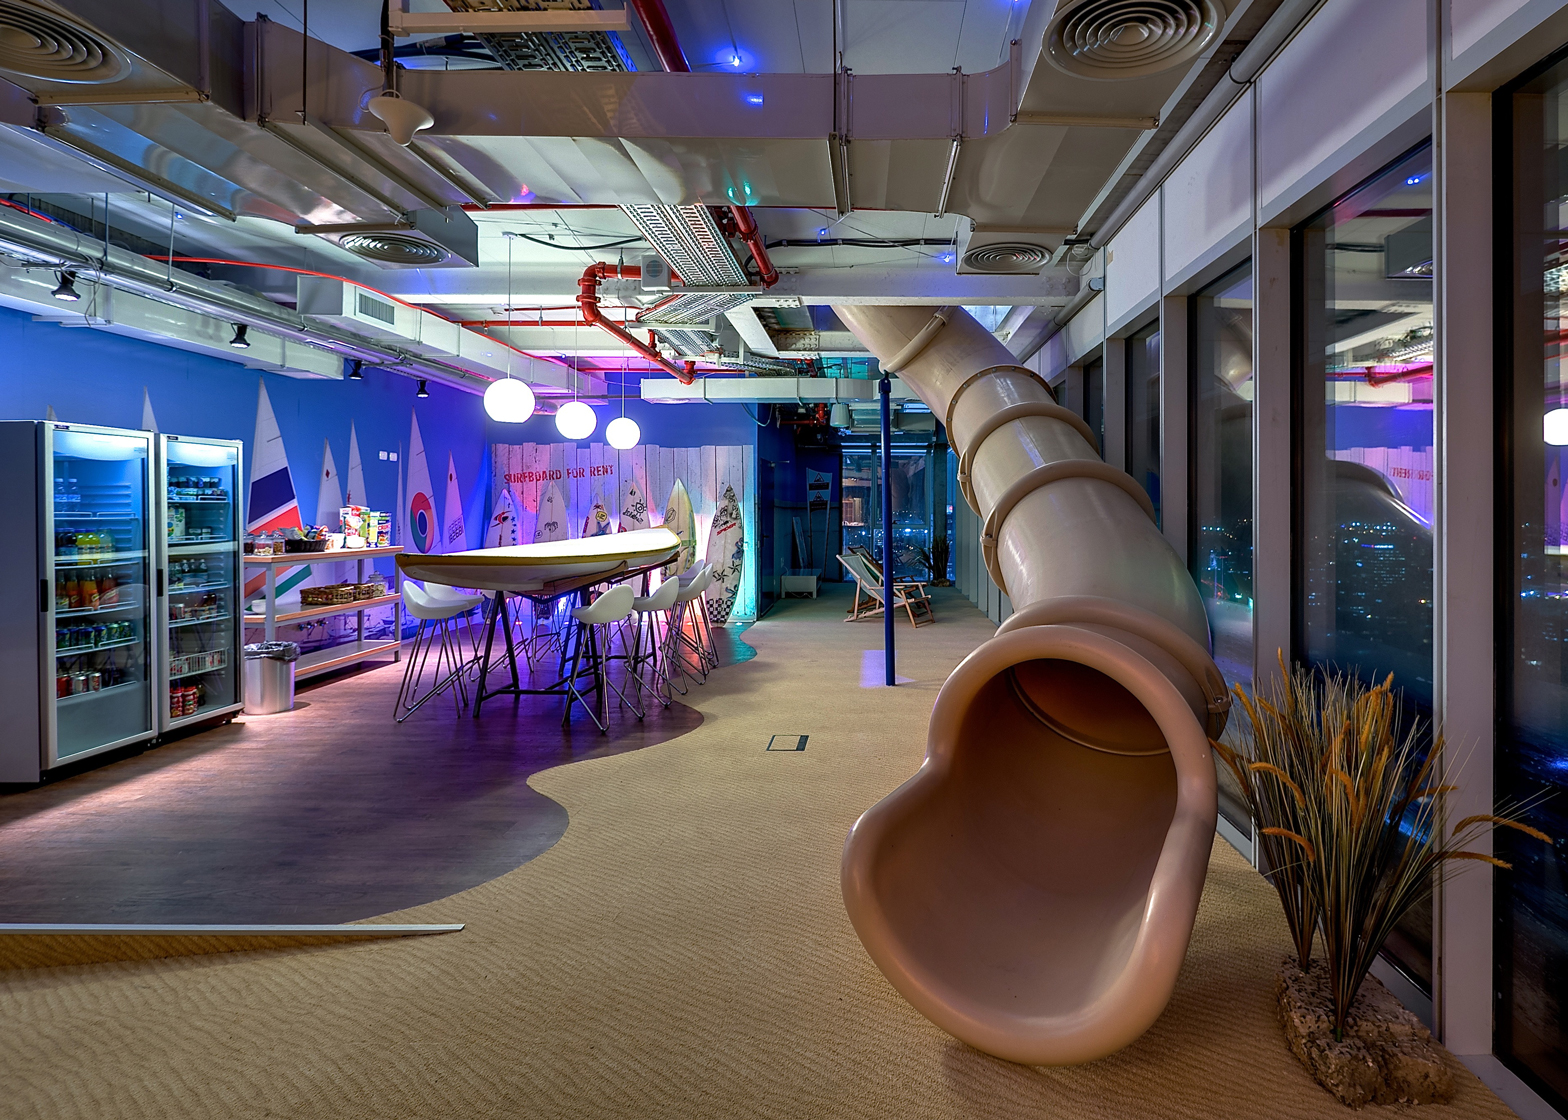 Google has had negative effect on office design says Jeremy Myerson